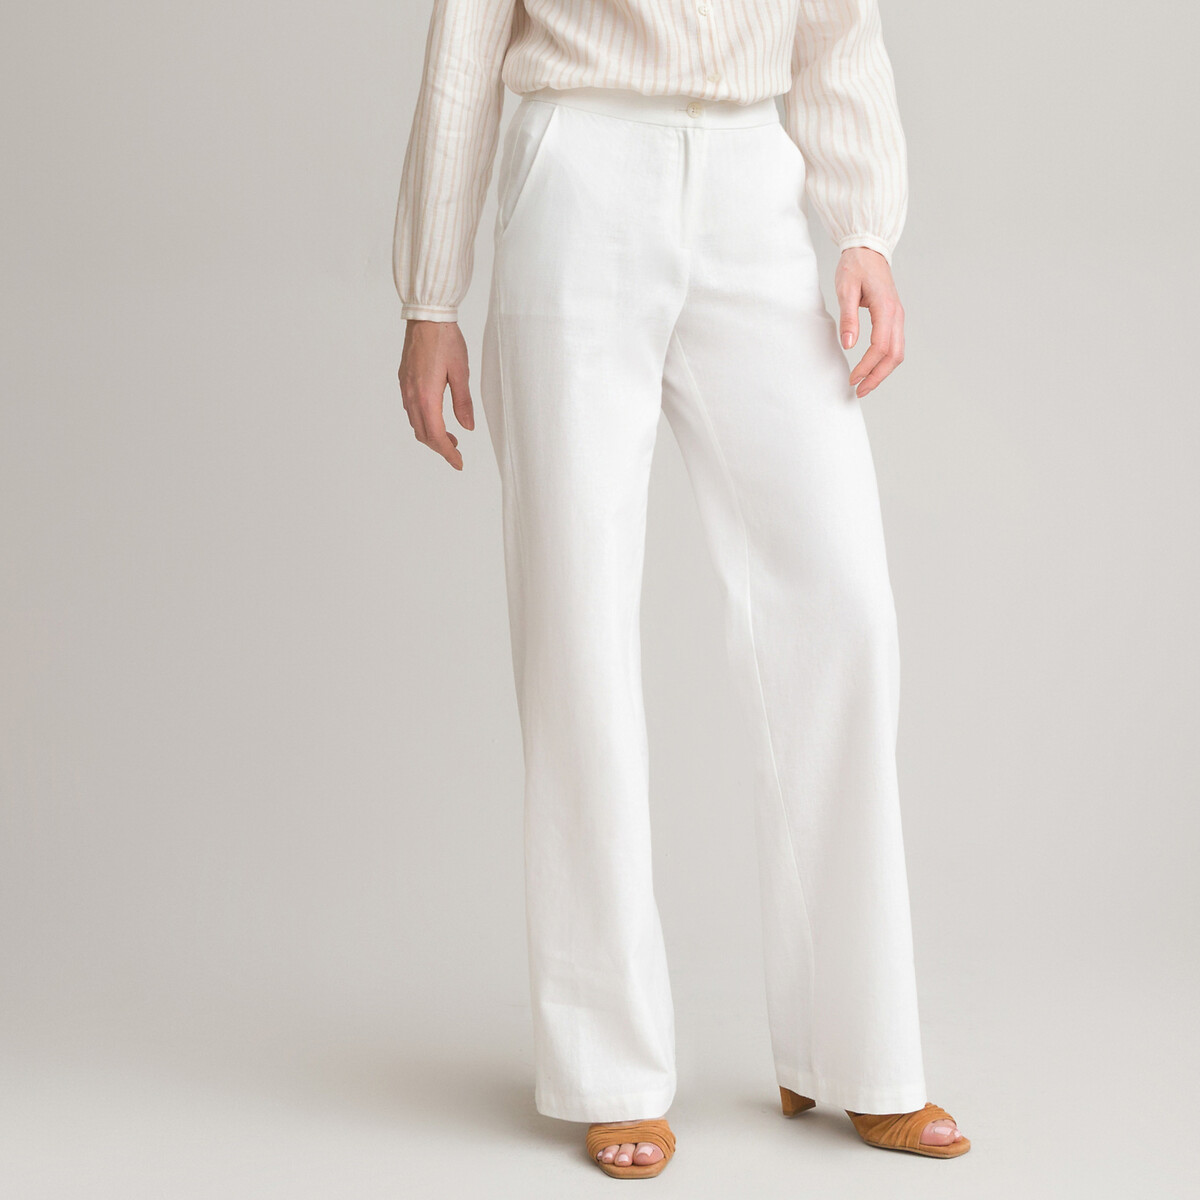 Linen mix peg trousers, length 26.5, beige, Anne Weyburn